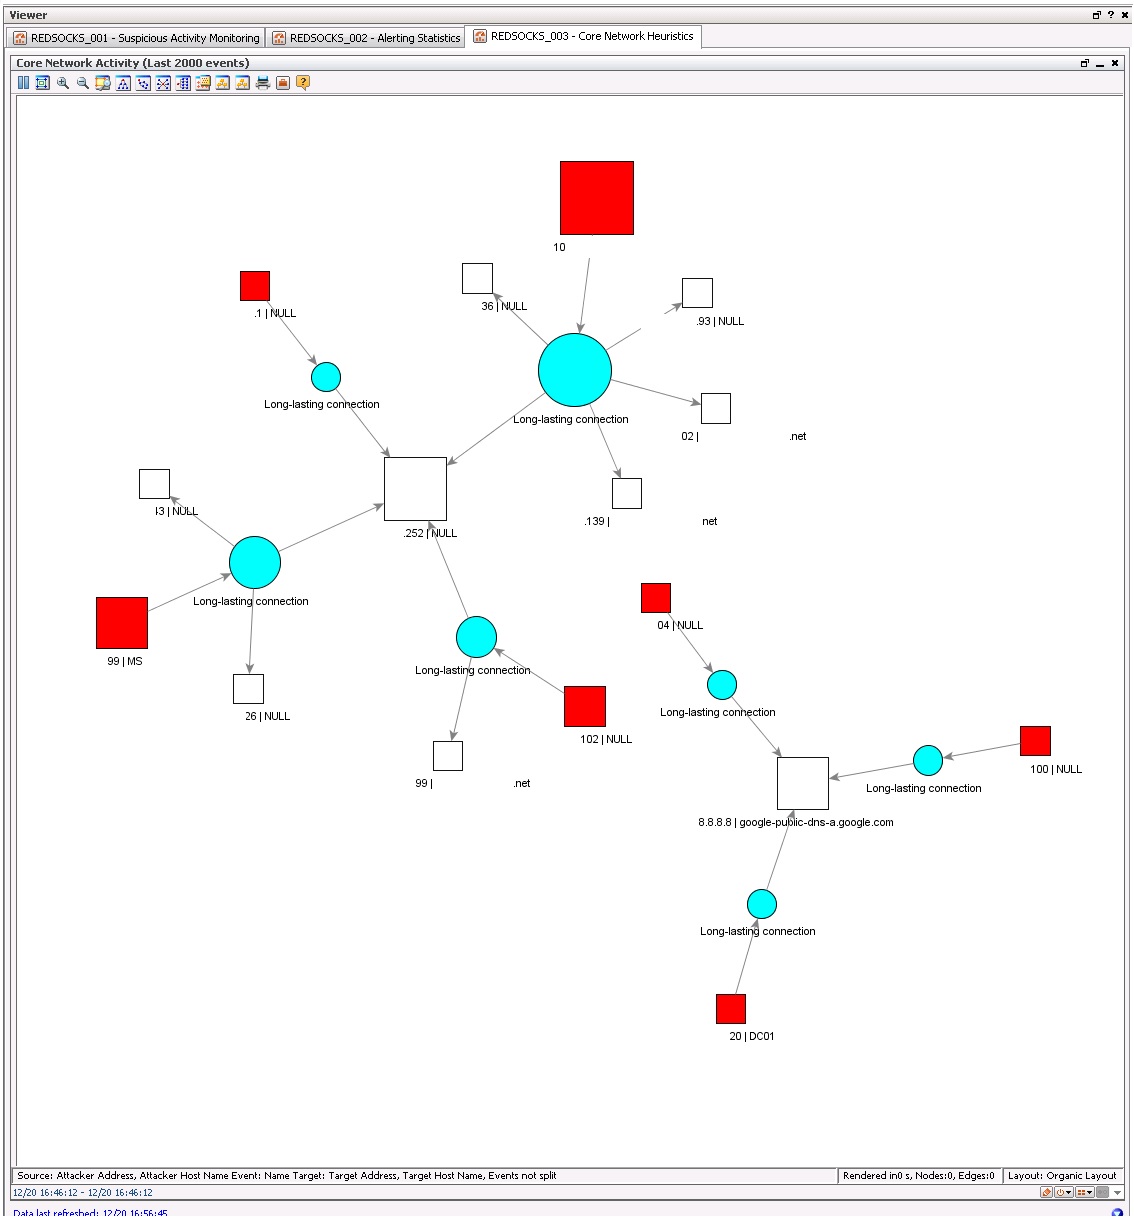 Arcsight - Core network model based on network heuristics